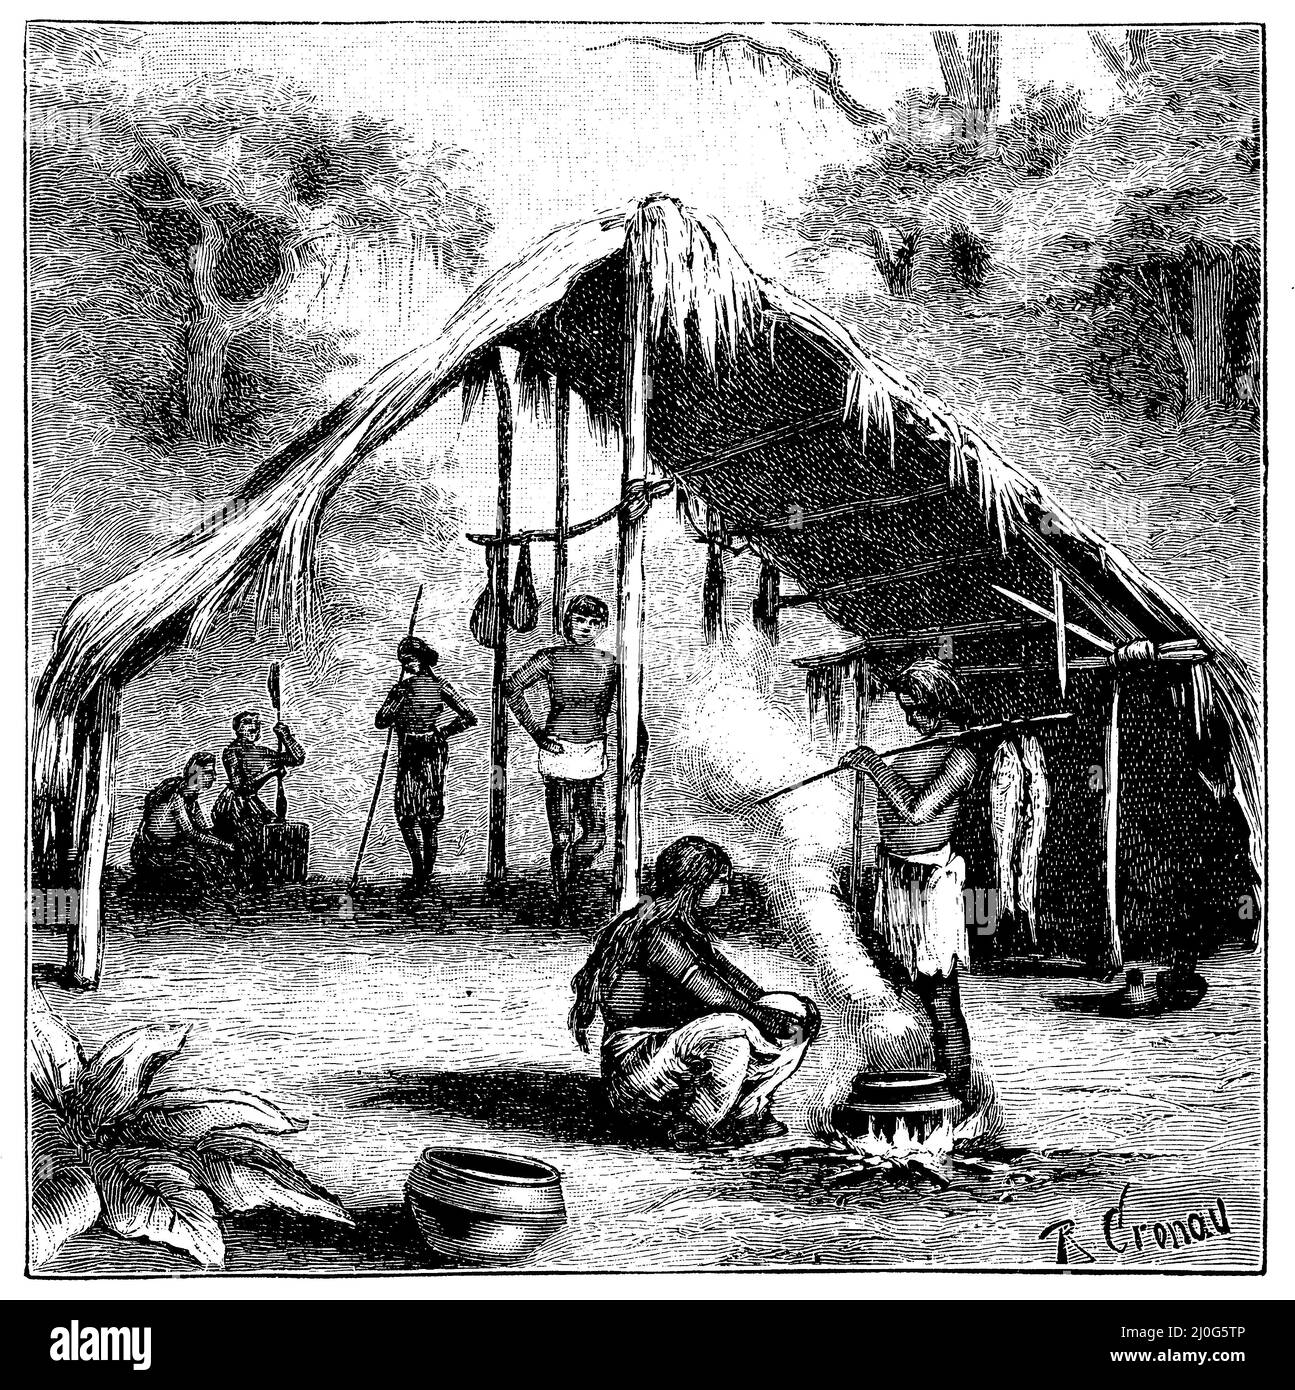 Capanna di nativi sulla parte superiore del Rio delle Amazzoni, , R. Cronau (, 1906), Hütte von Eingeborenen am oberen Amazonenstrom, Cabane d'indigènes sur le haut fleuve Amazone Foto Stock